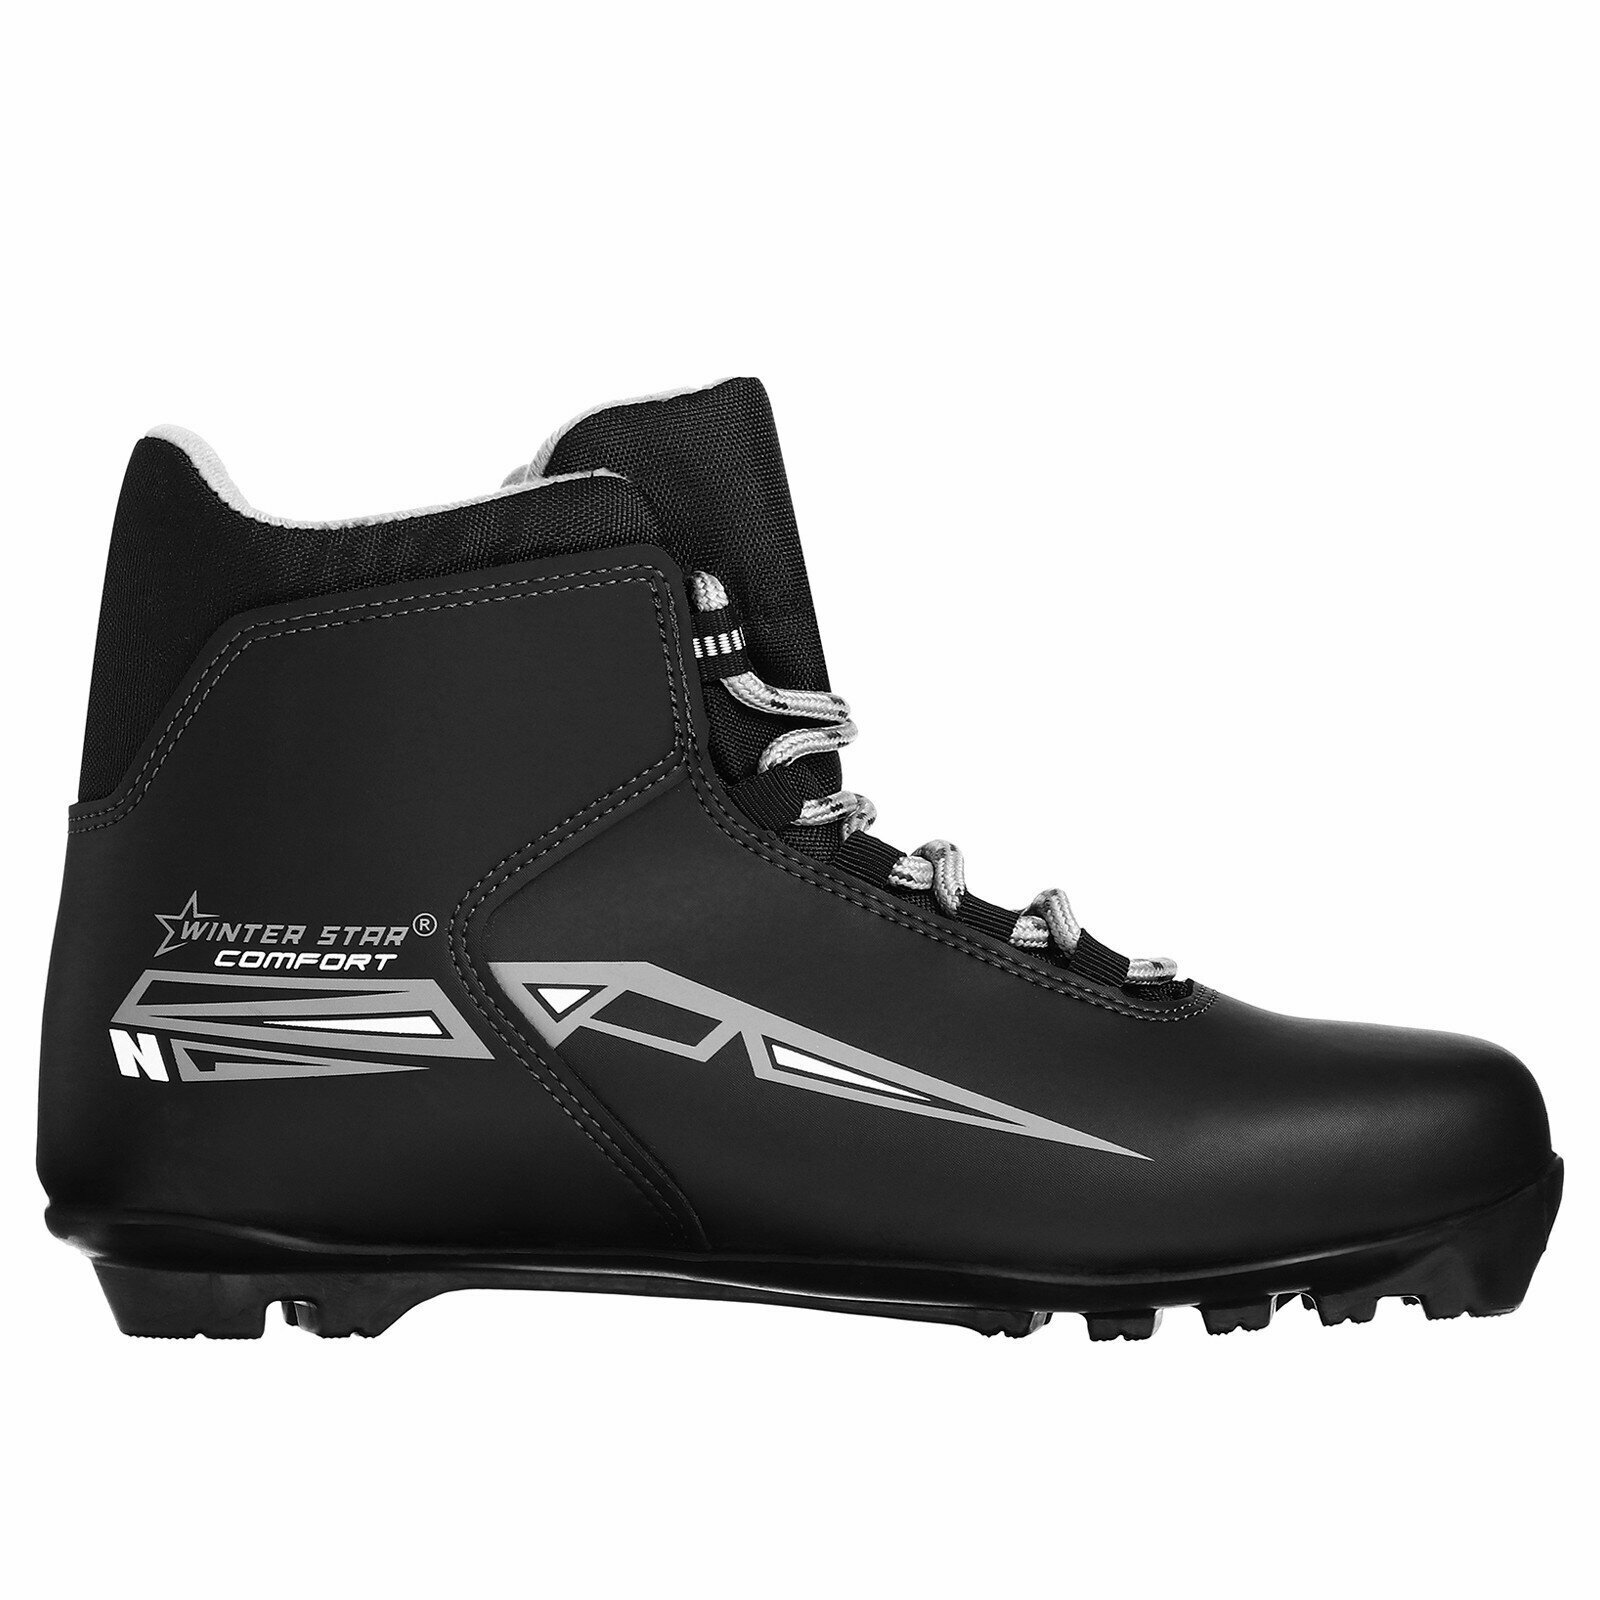 Ботинки лыжные Winter Star comfort, Nnn, р. 37, цвет чёрный, лого серый Winter Star 9796116